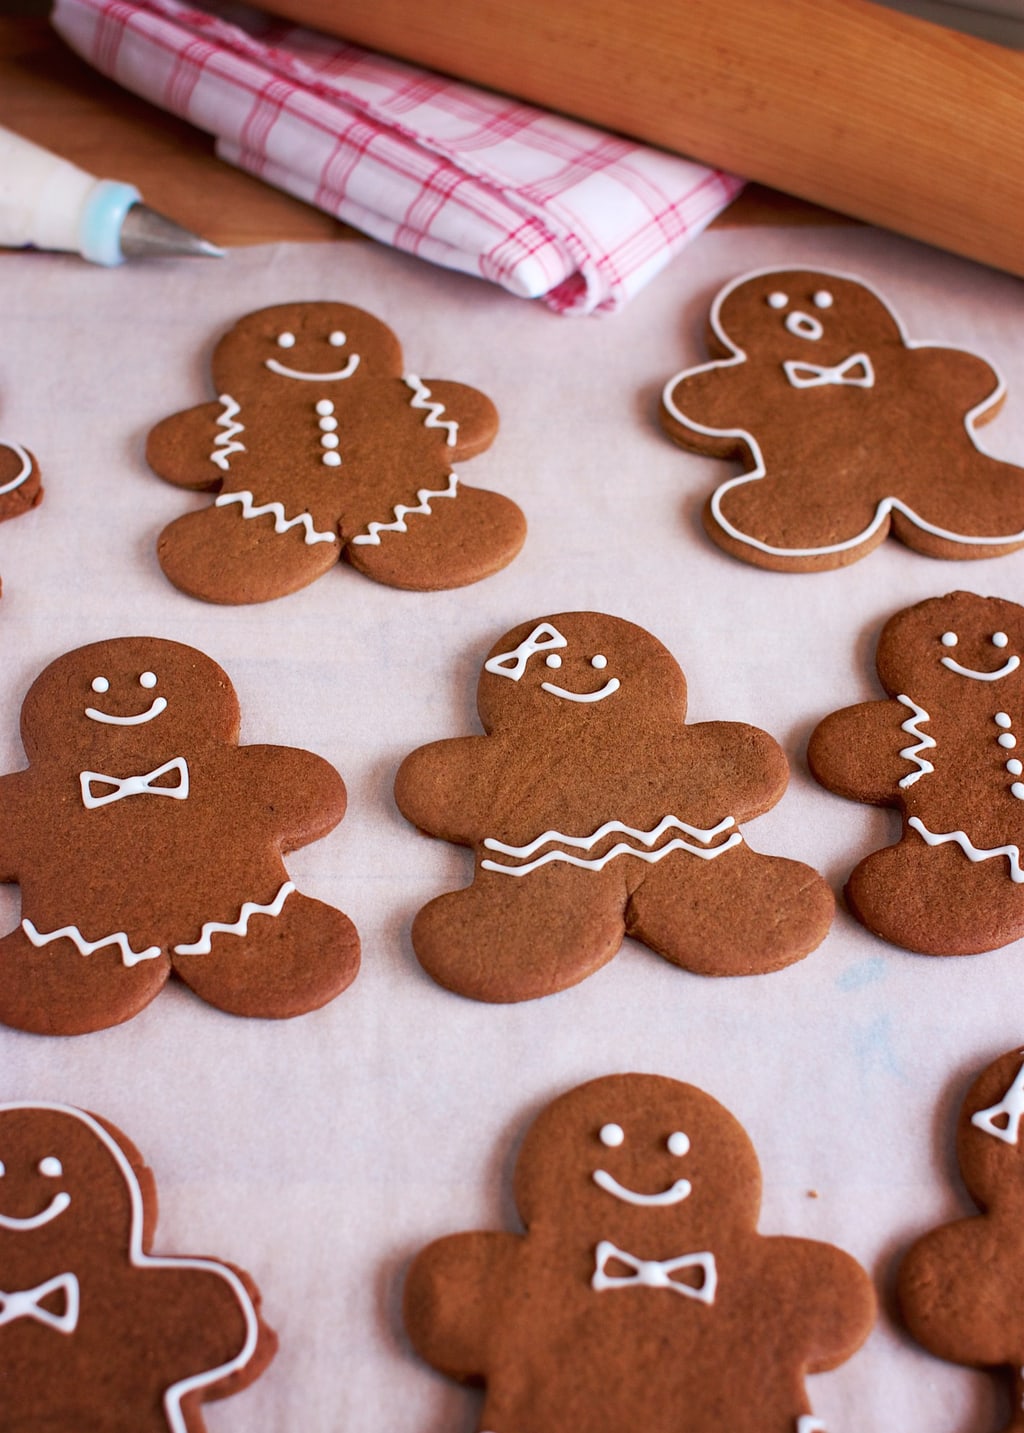 Gingerbread men cookies on a countertop.